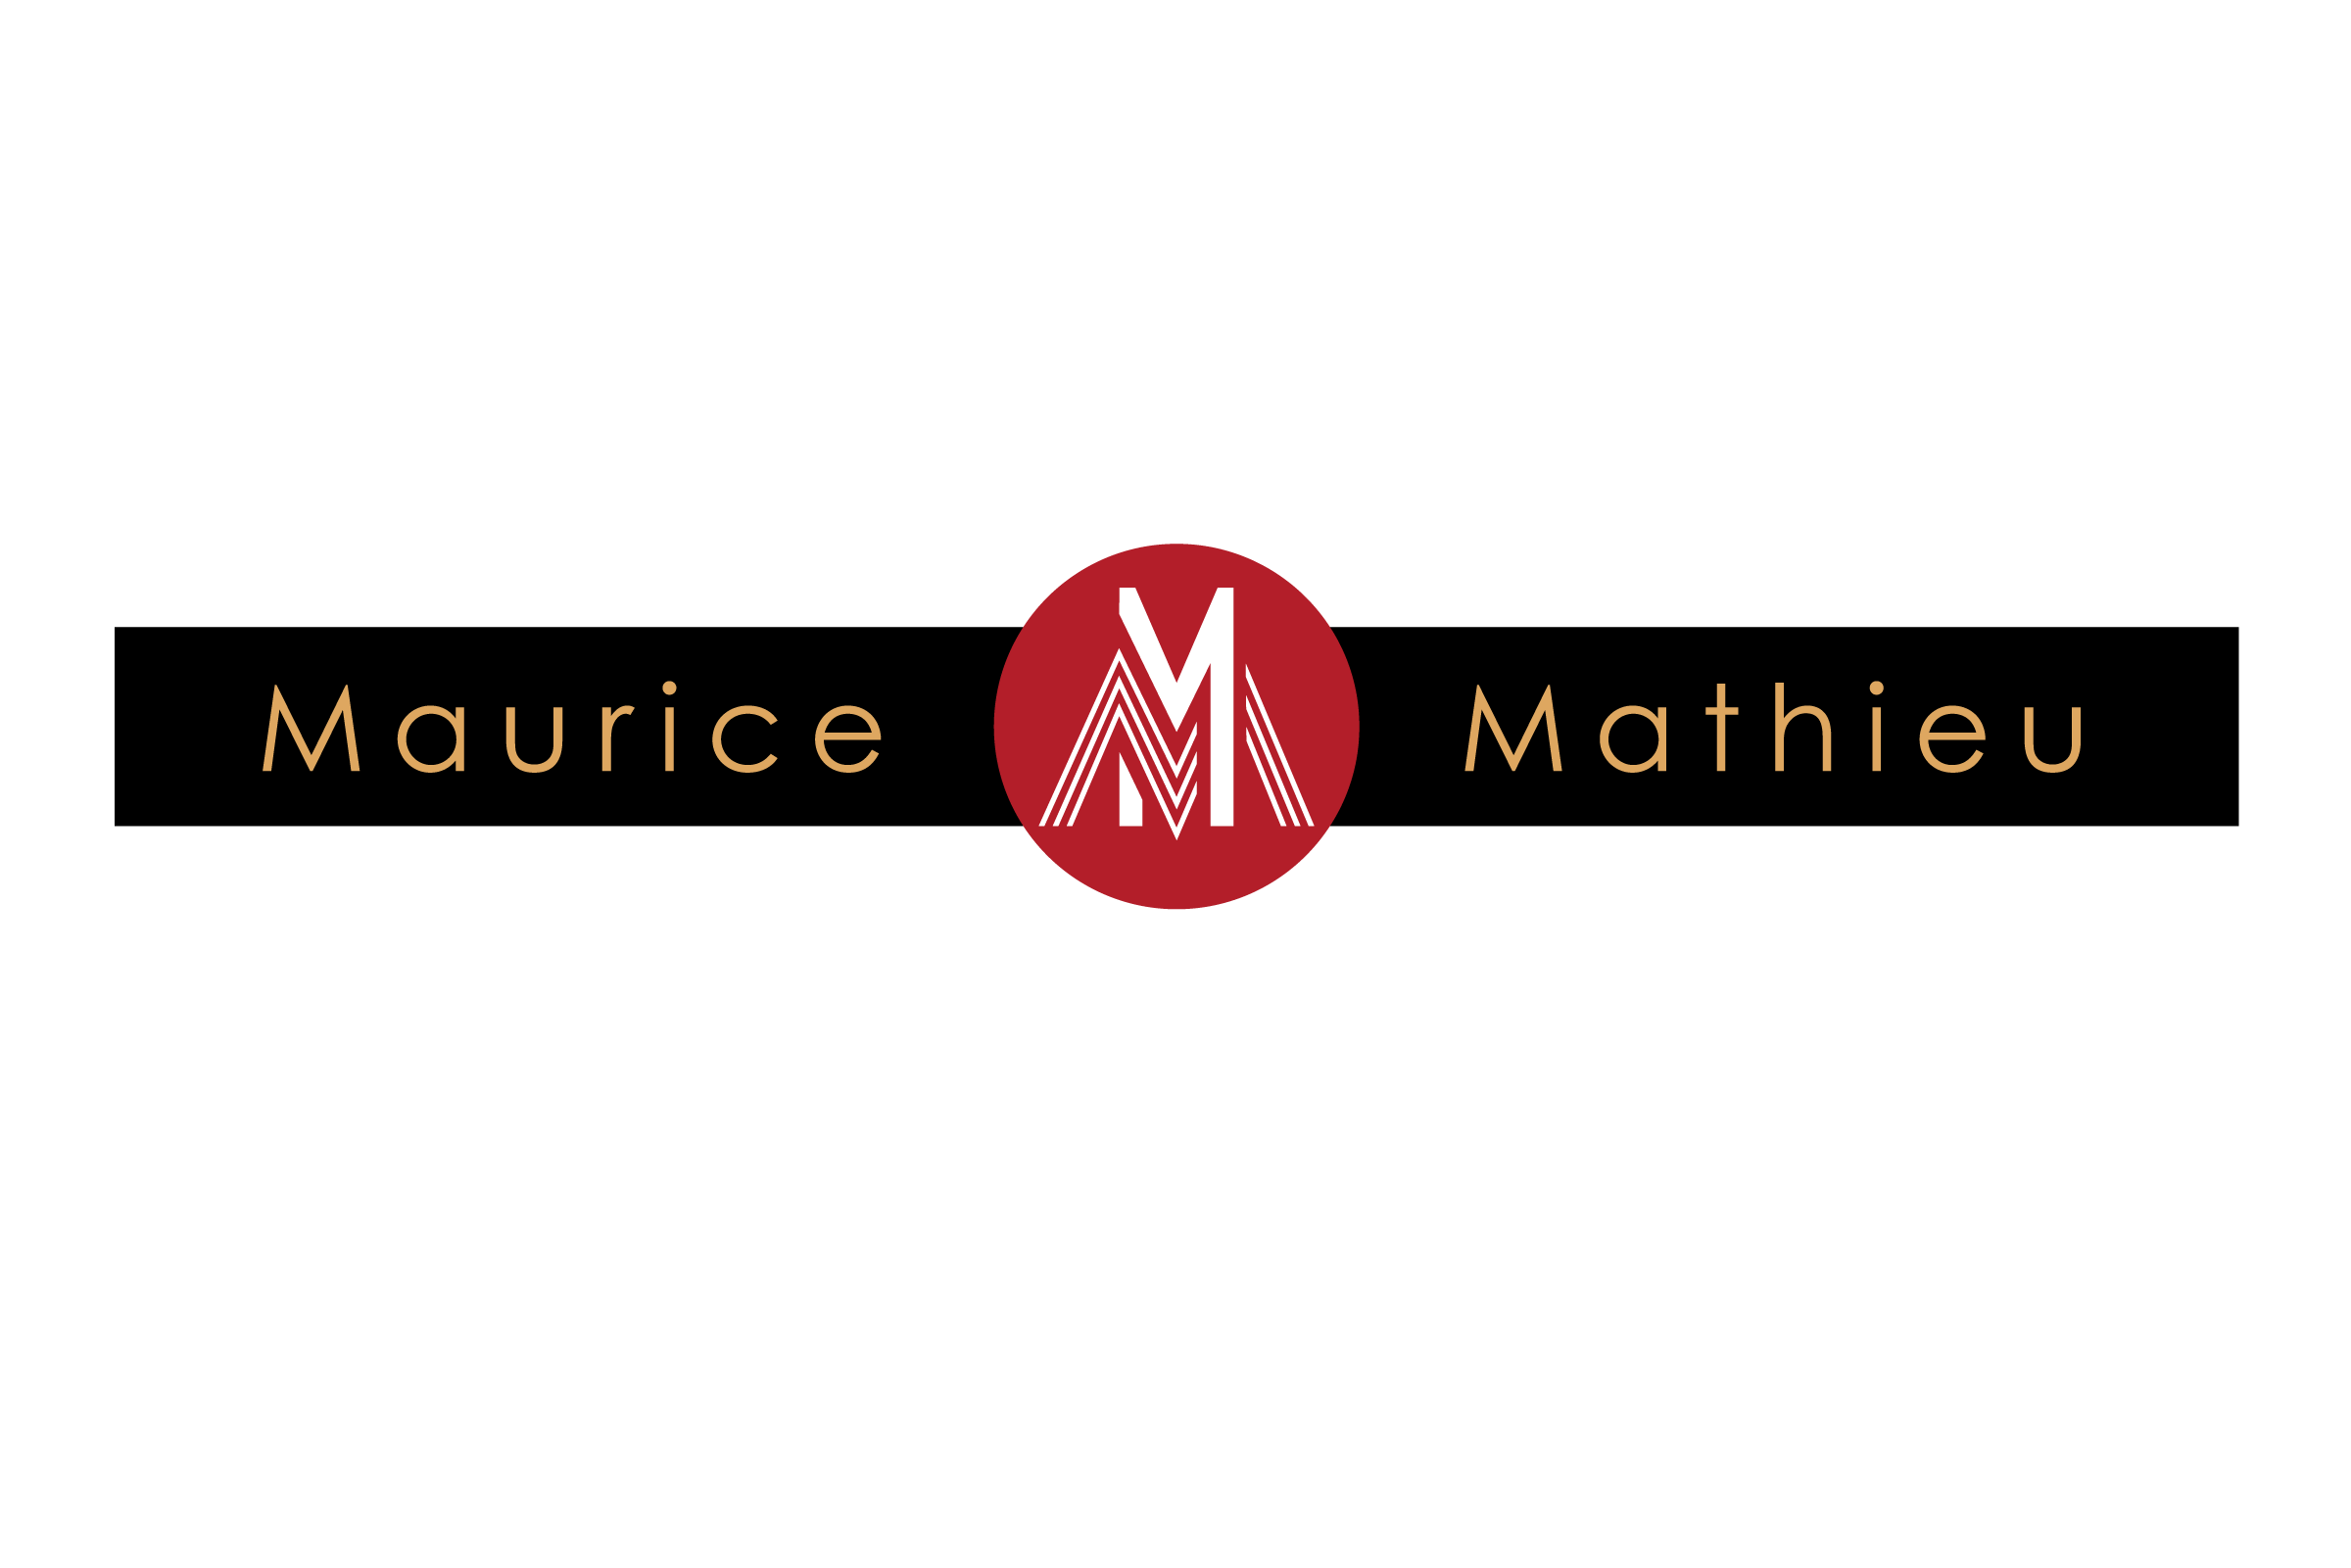 Maurice Mathieu brand guideline by Vandekerckhove & Devos